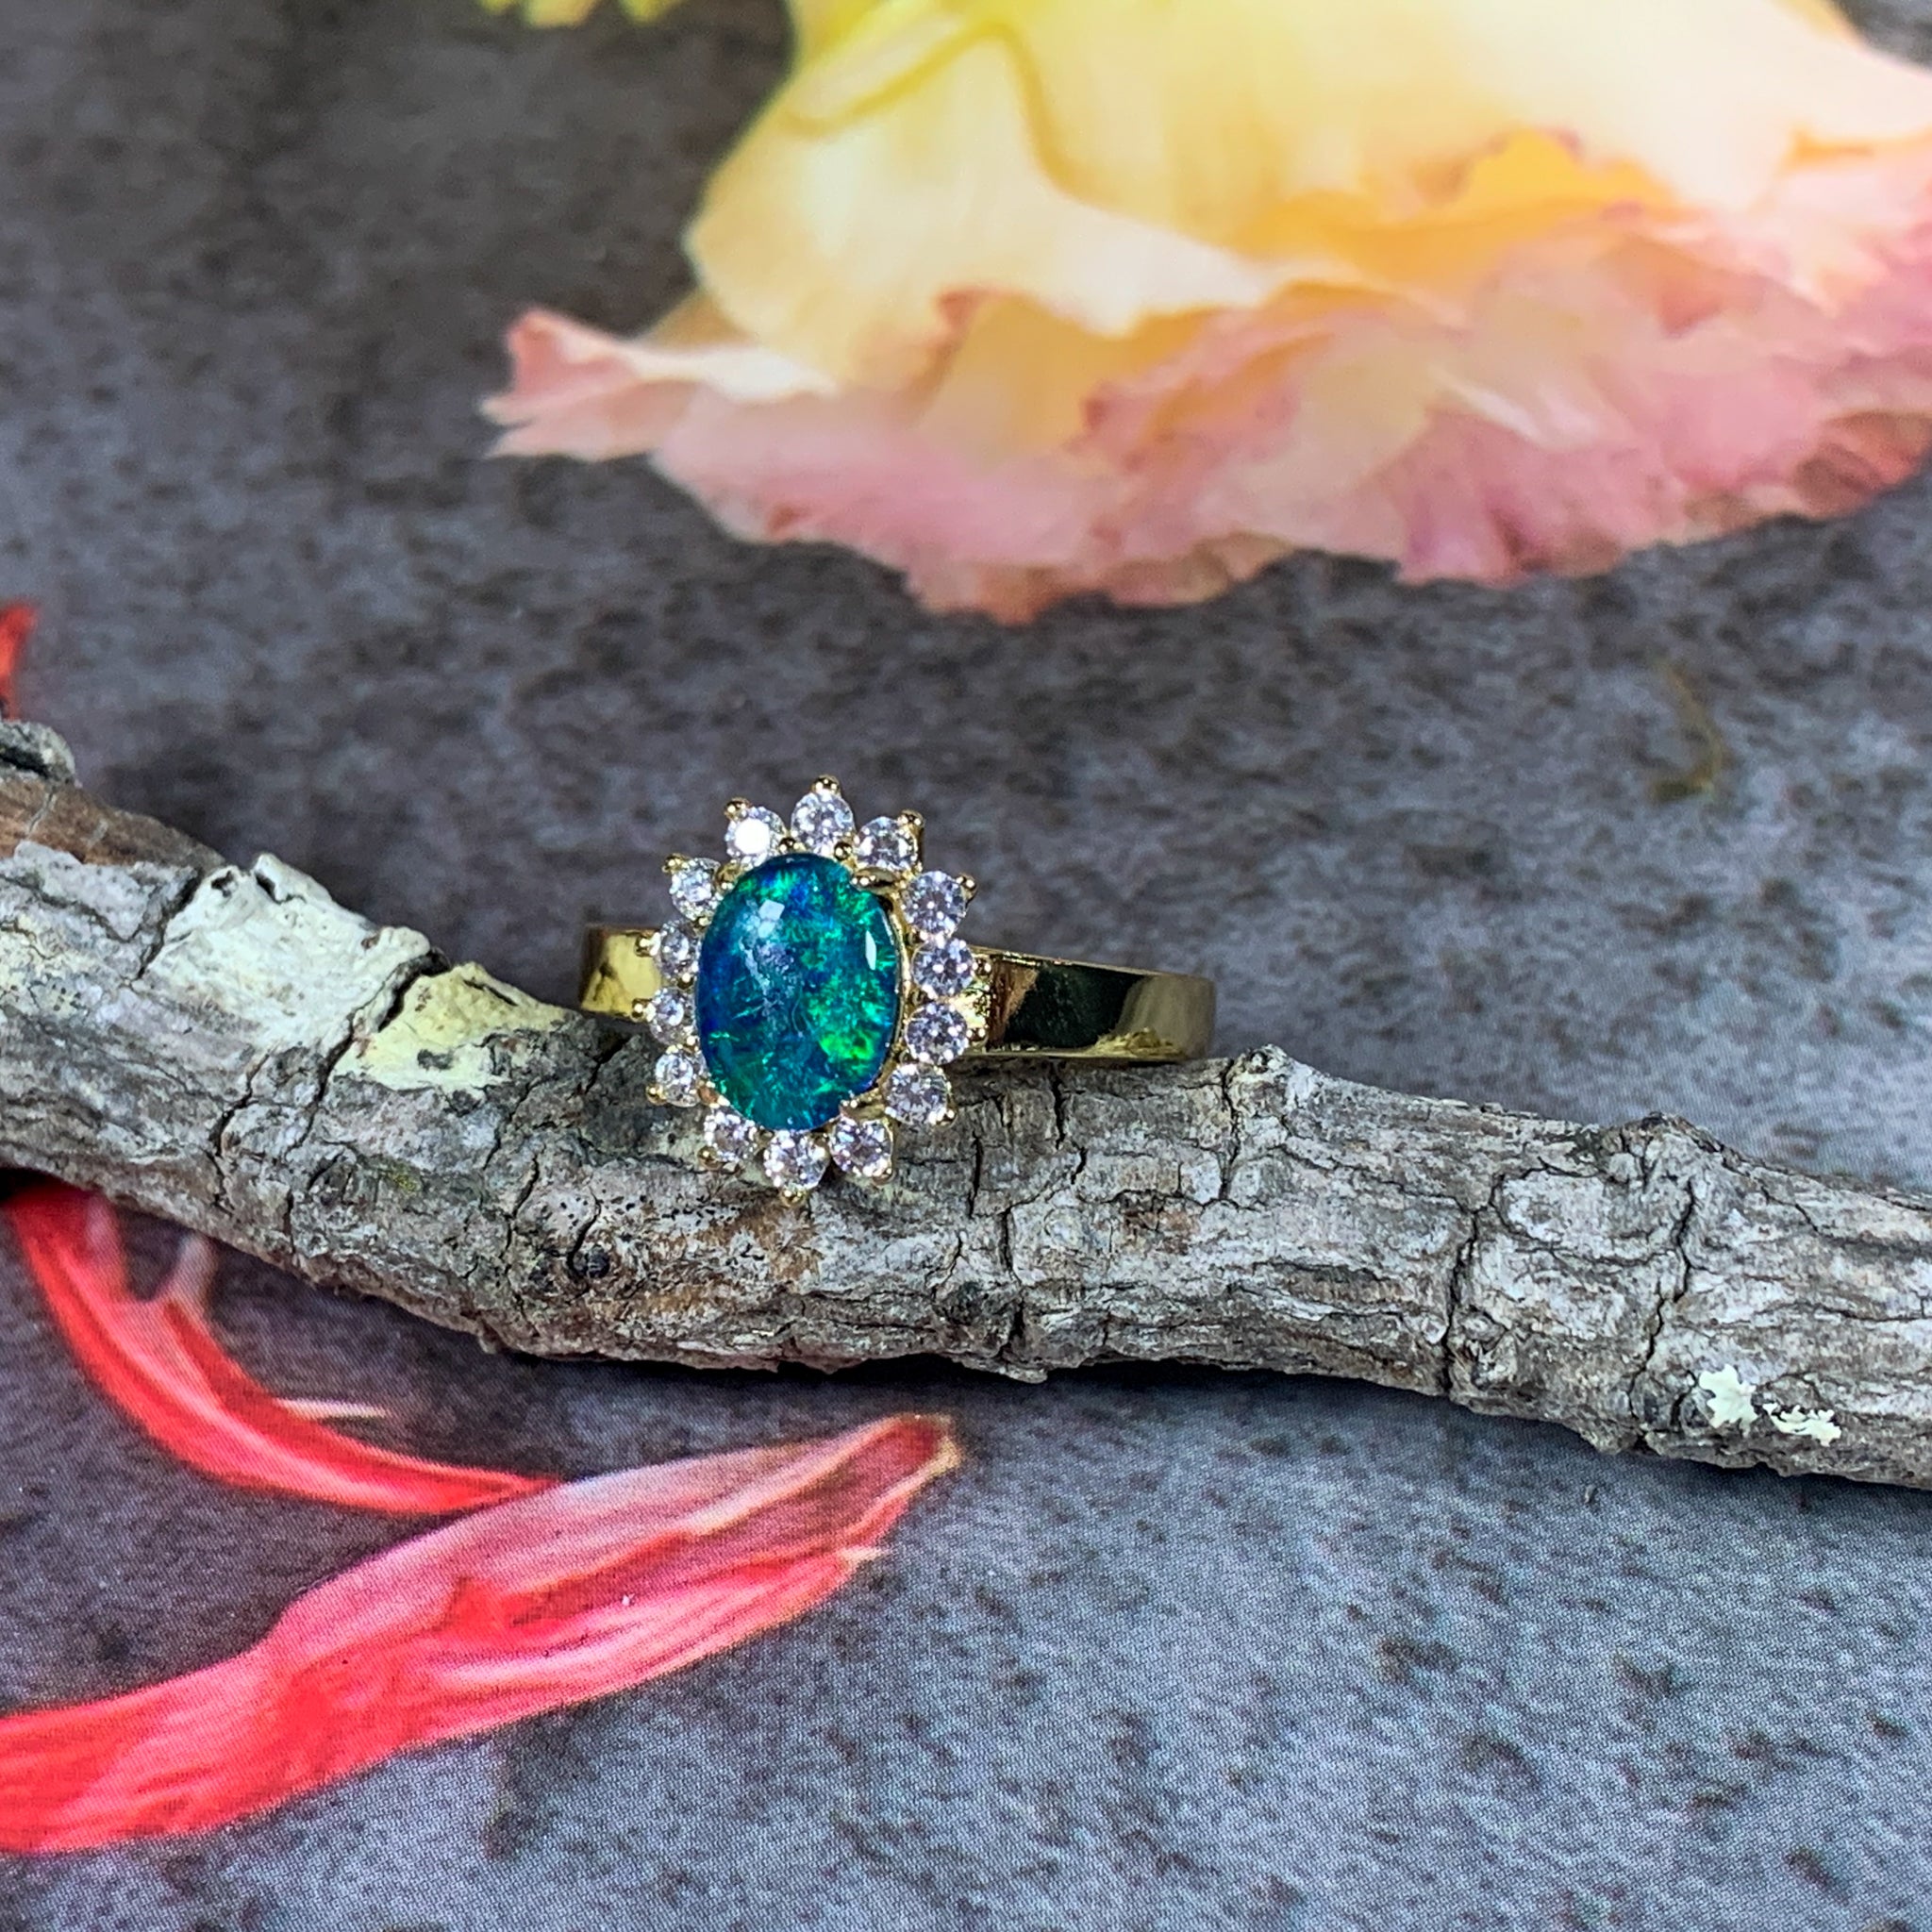 Gold plated Triplet 8x6mm Opal cluster ring - Masterpiece Jewellery Opal & Gems Sydney Australia | Online Shop